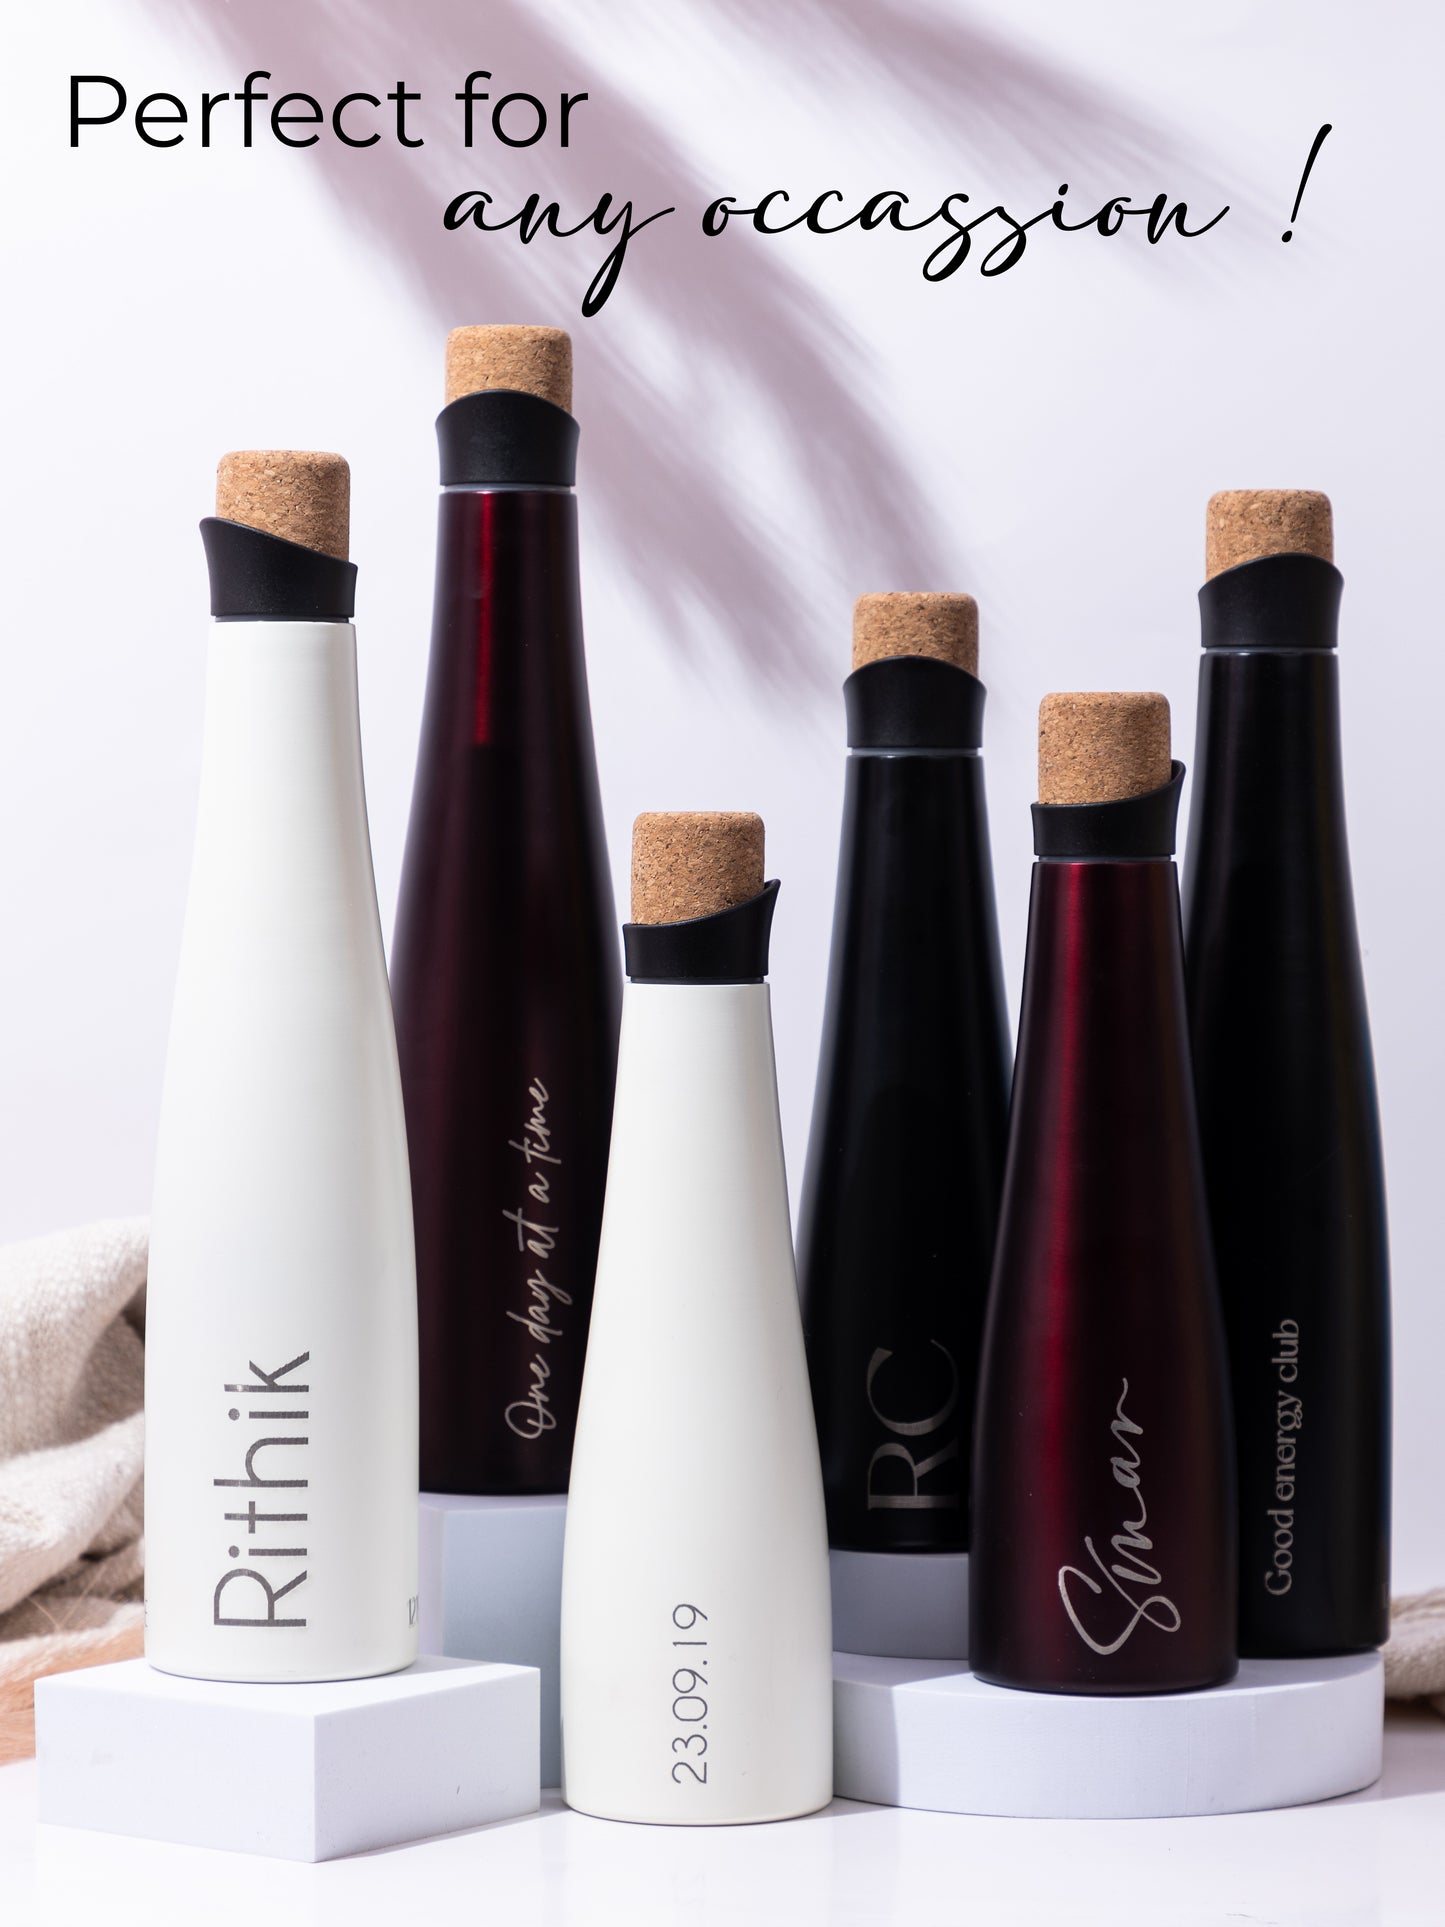 Personalized Recherche Wine Shaped Insulated Bottles NO COD